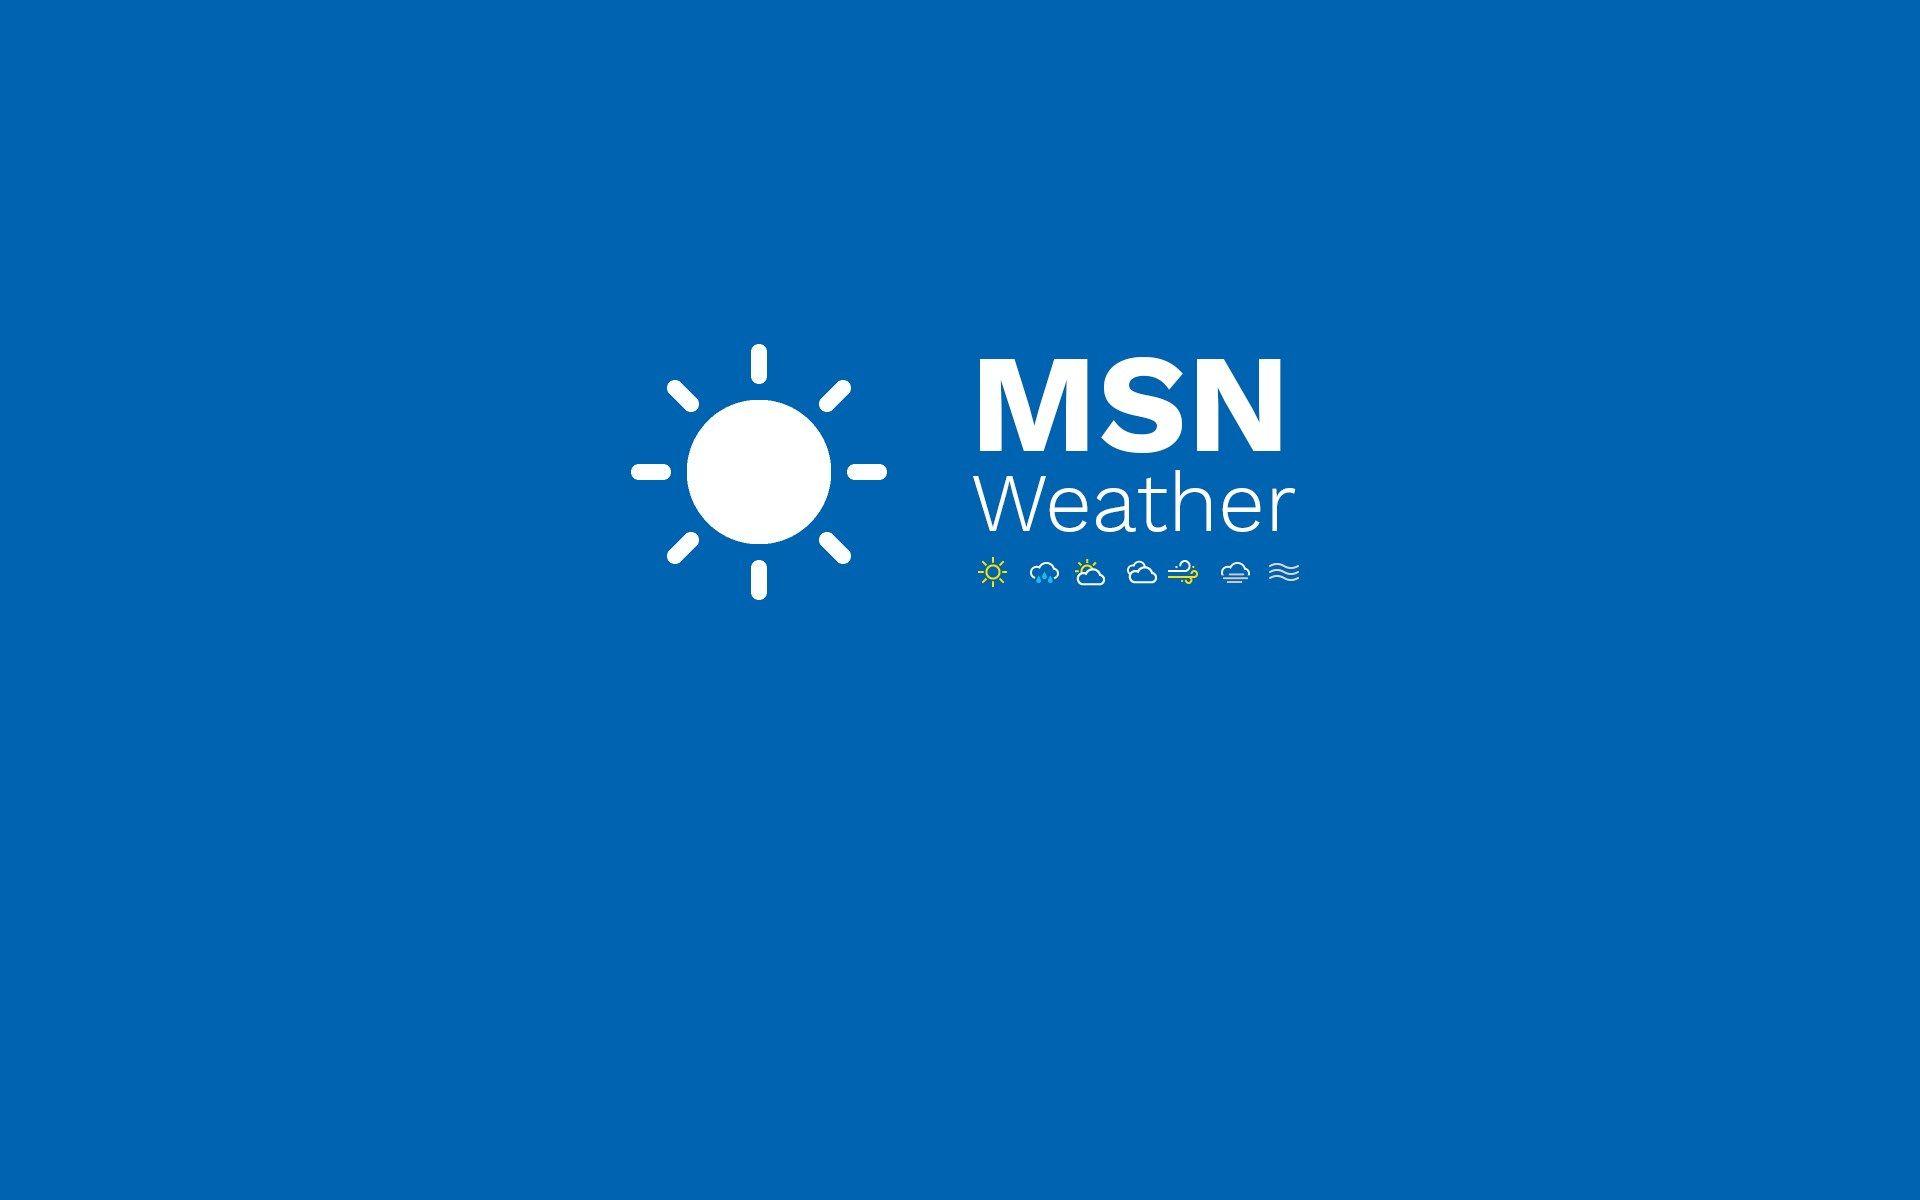 MSN Weather Logo - MSN Weather for Windows 10 Mobile receives transparent Live Tile